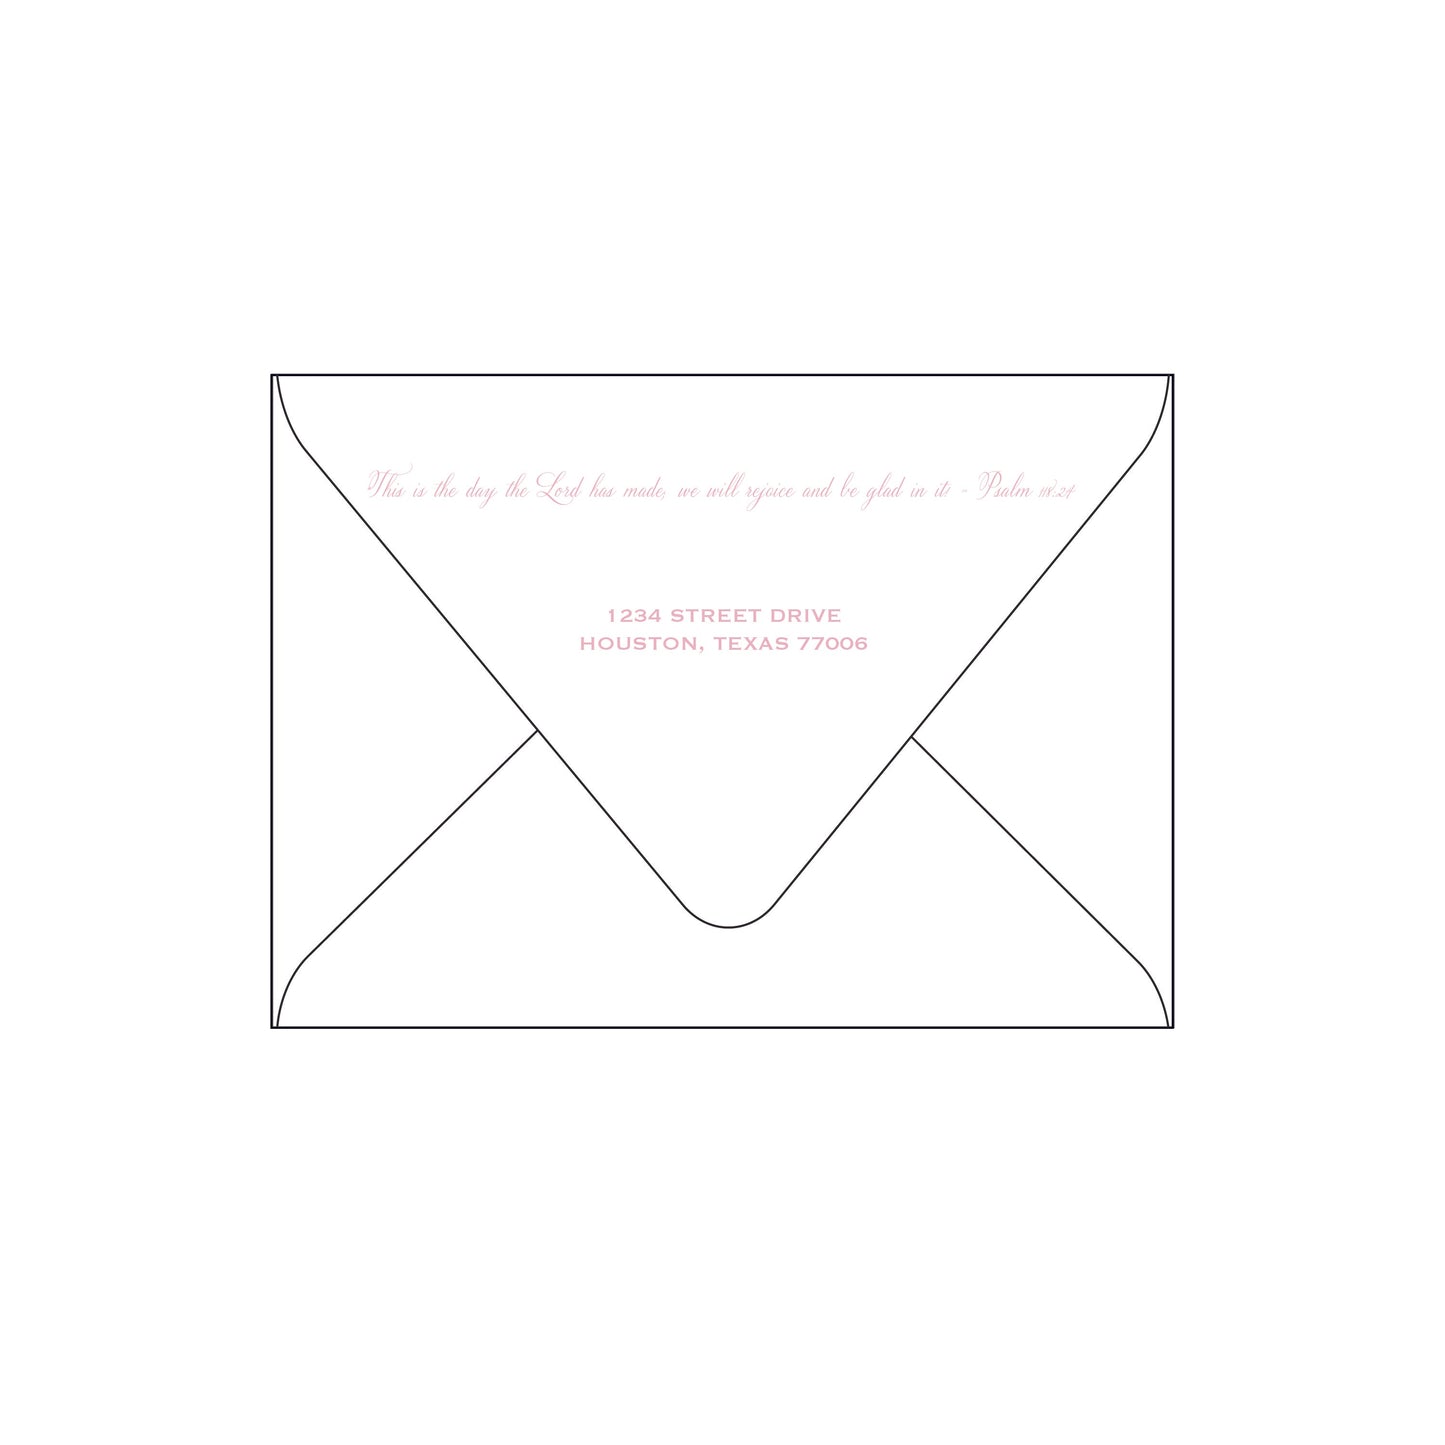 bird cross pink | invitation | specialty printing